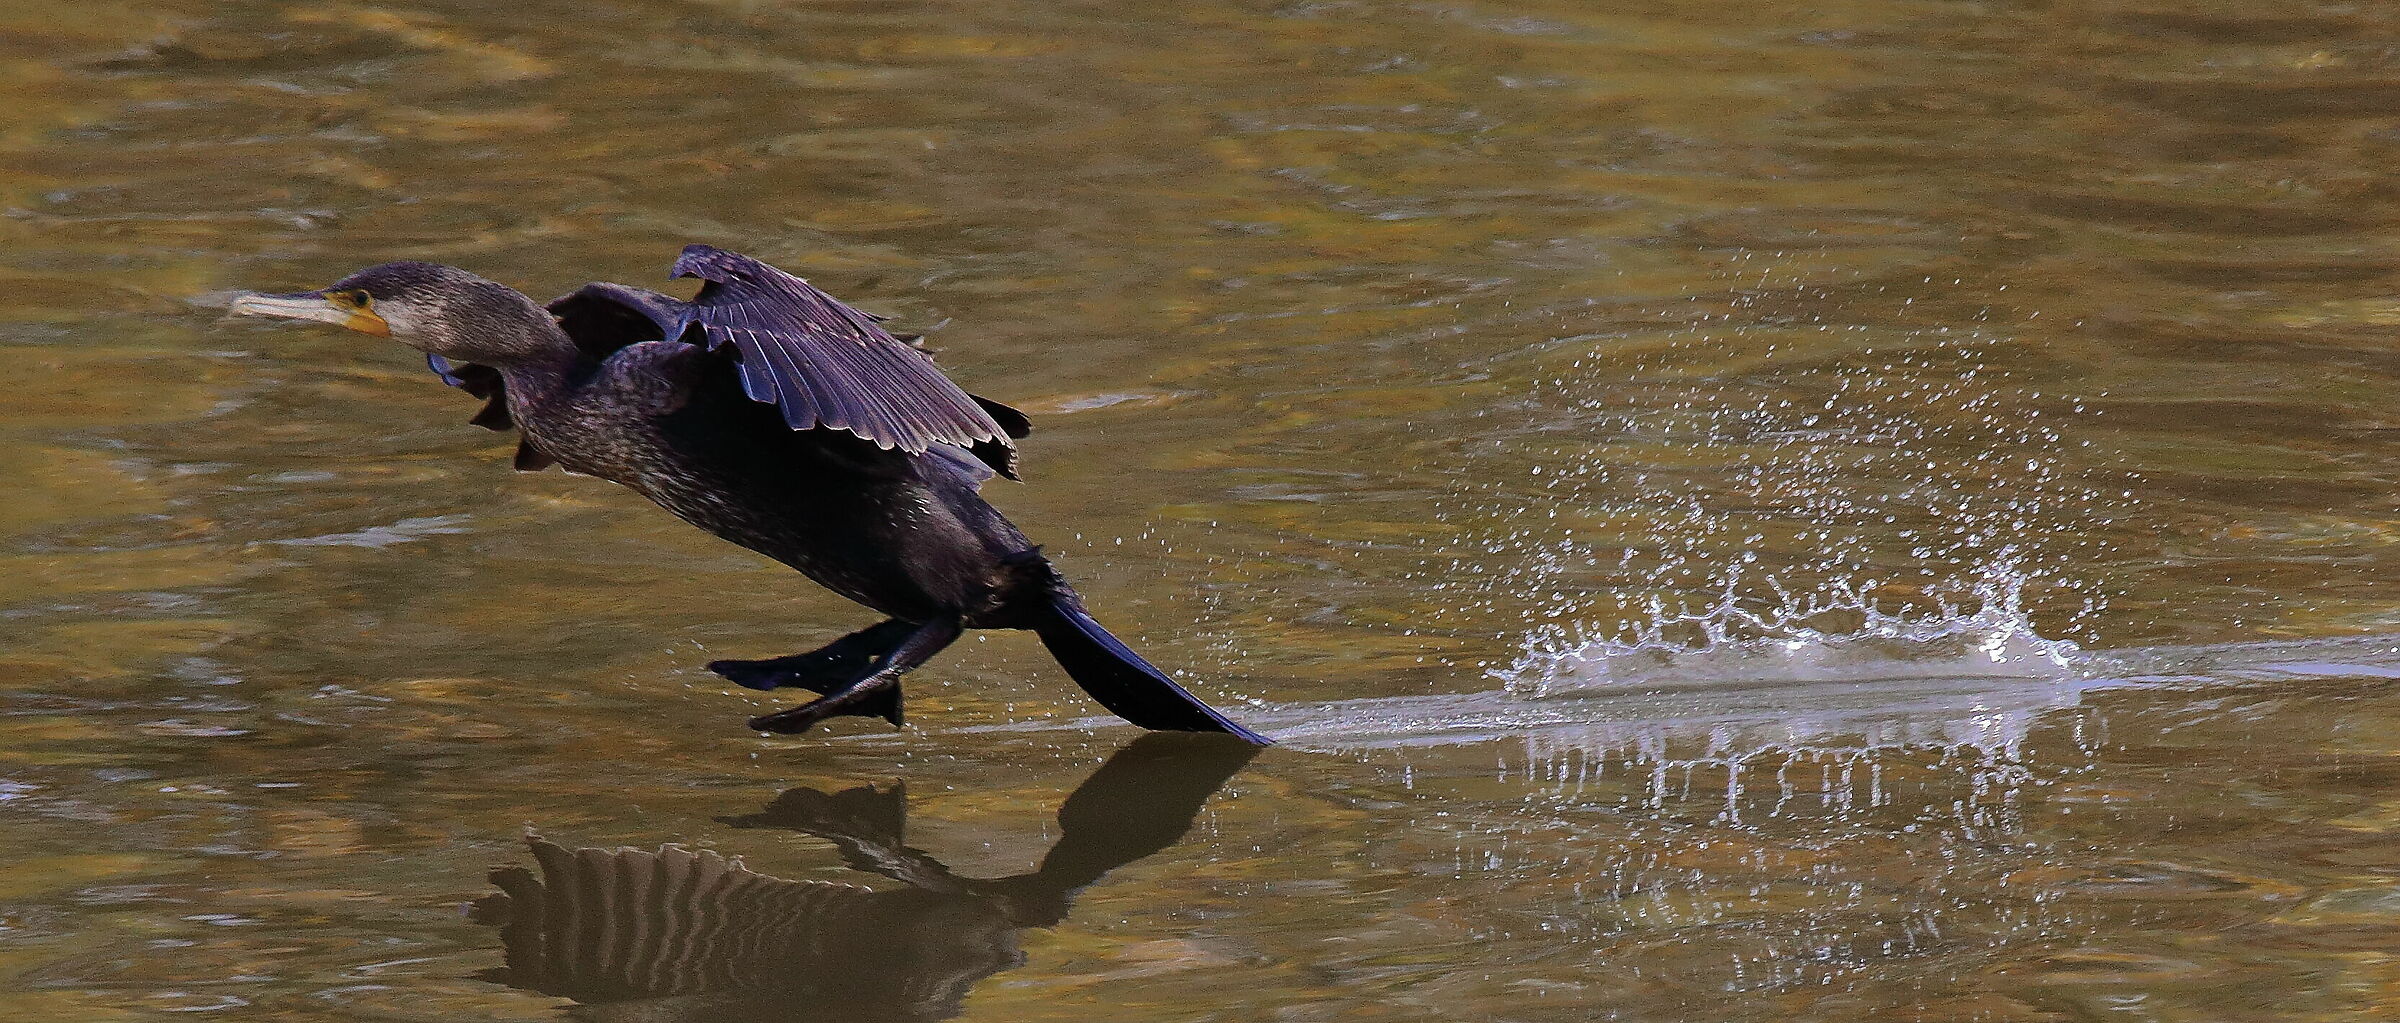 stabilizing tail (cormorant)....